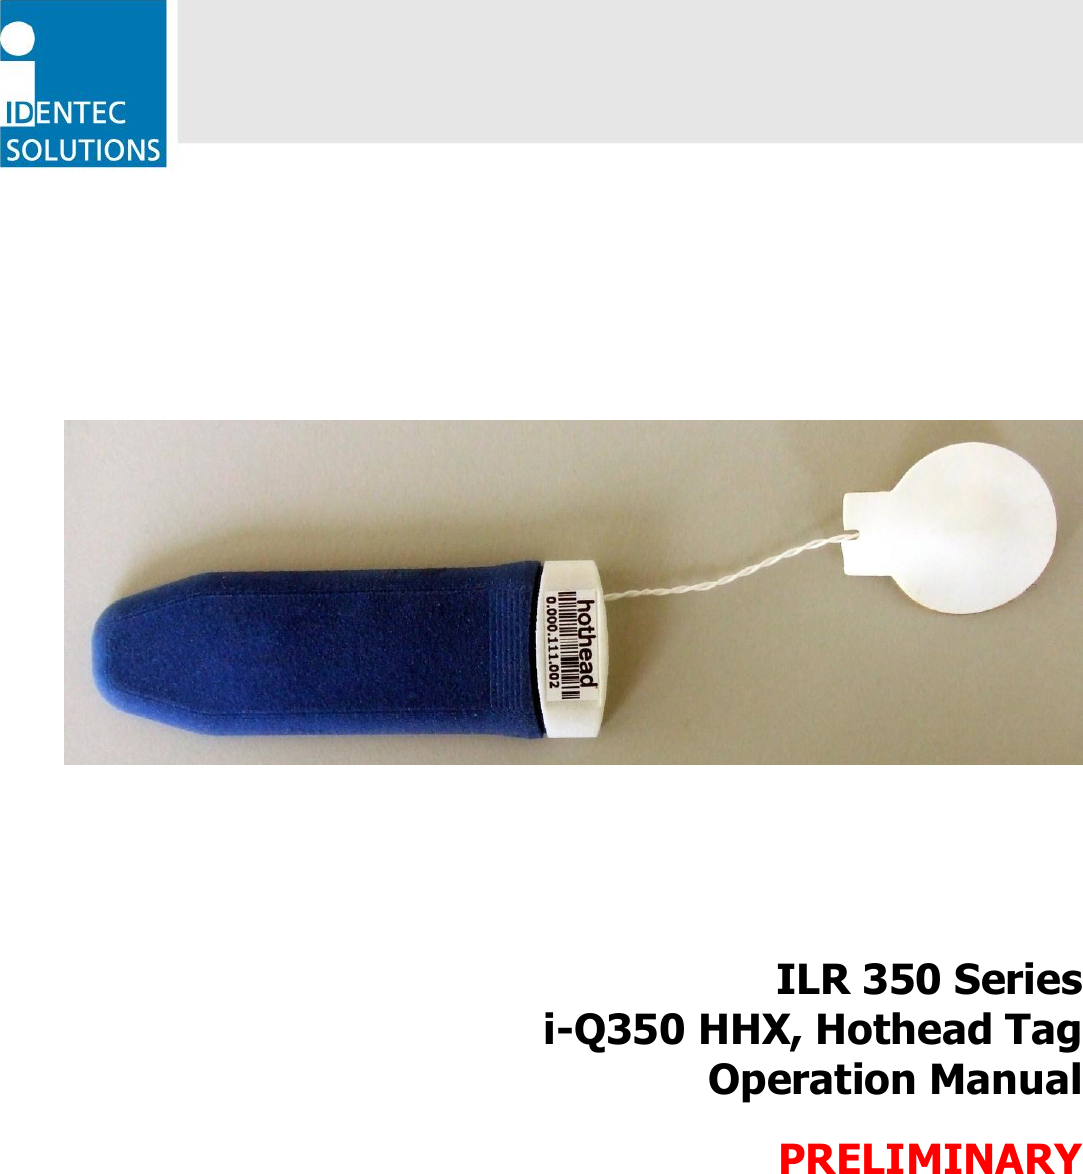              ILR 350 Series i-Q350 HHX, Hothead Tag Operation Manual  PRELIMINARY 